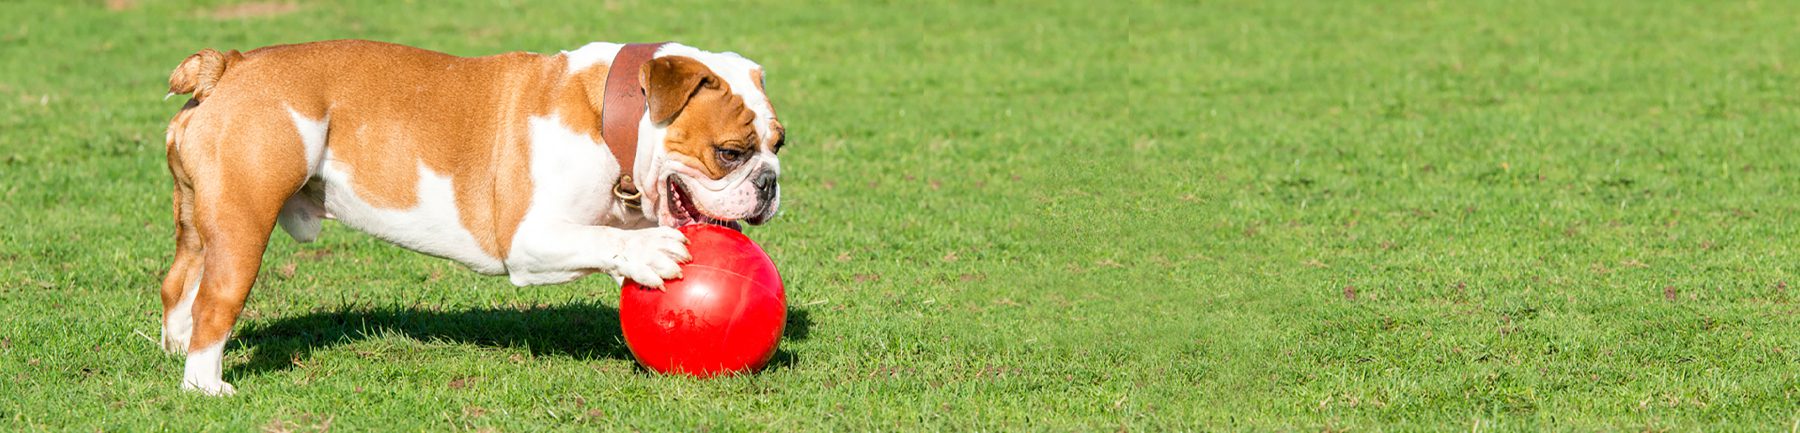 Bulldog enjoying large red boomer ball